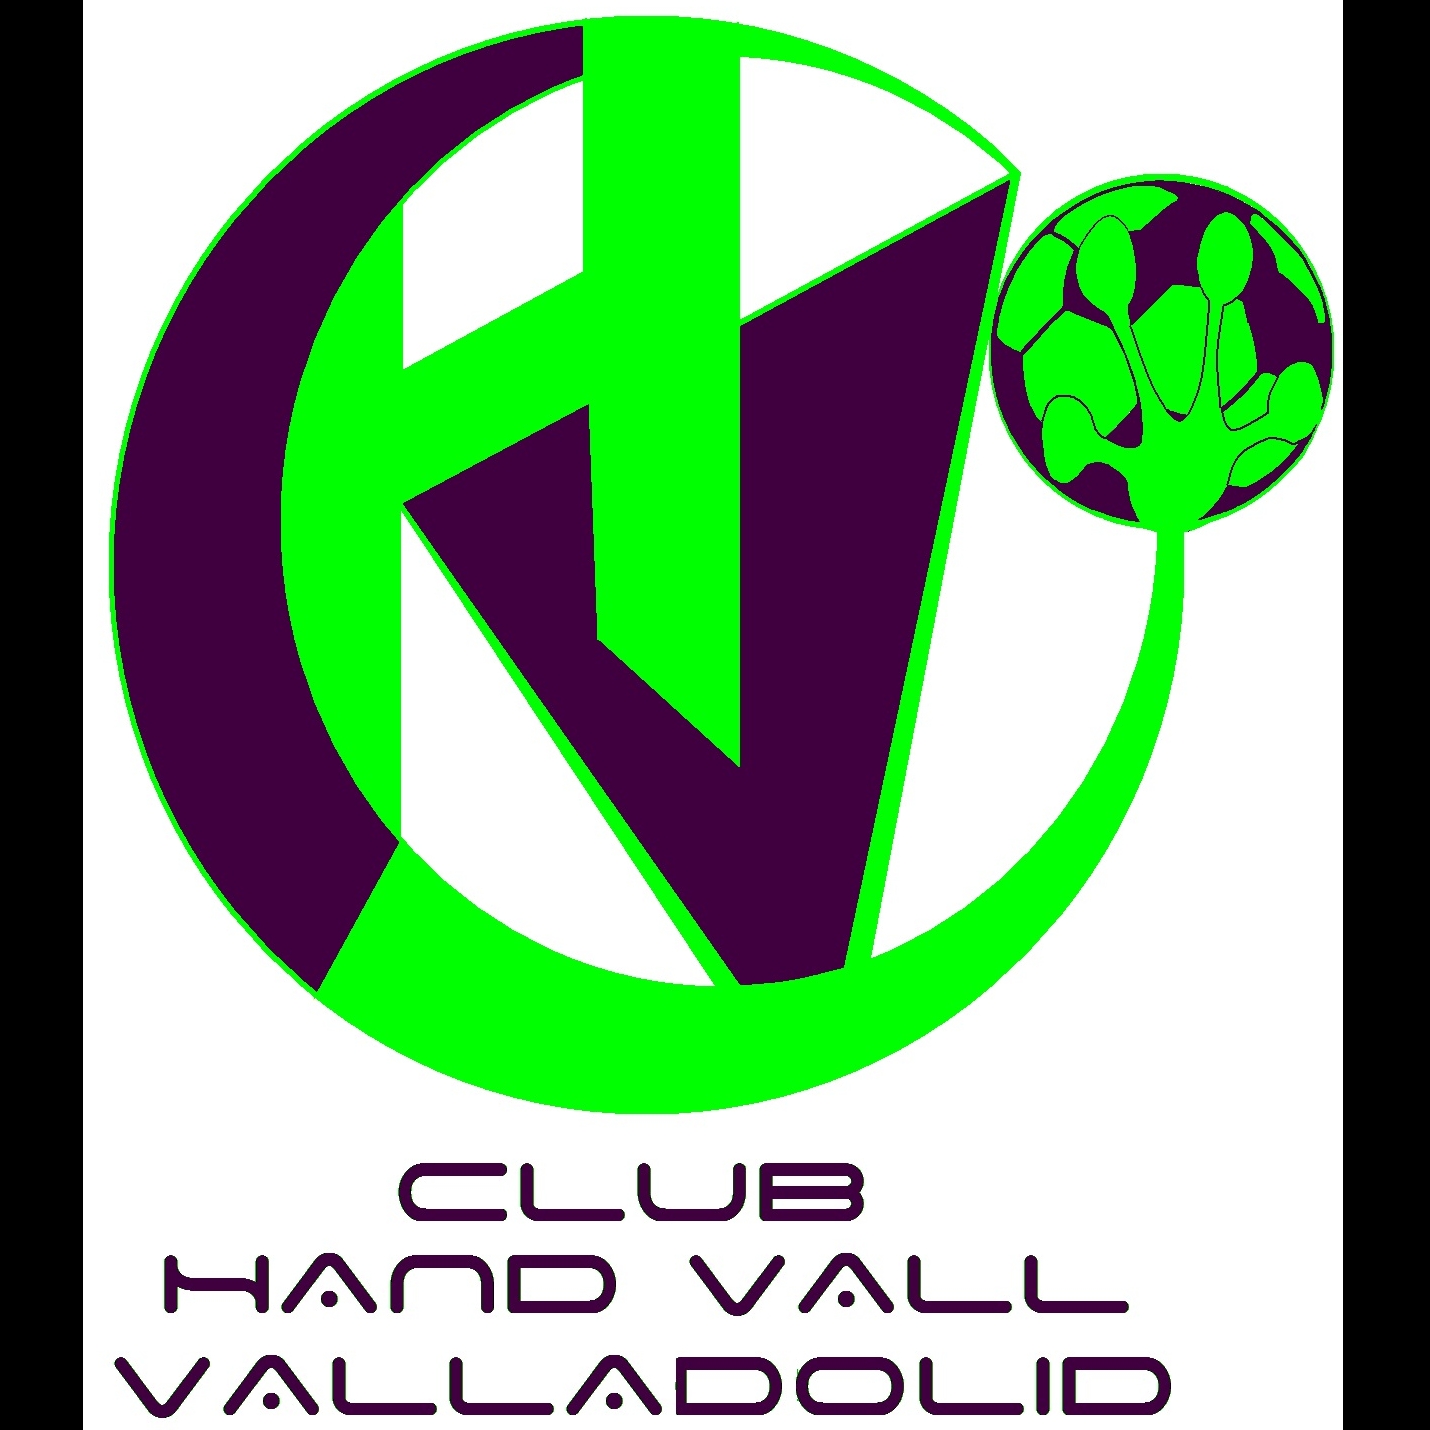 CLUB DEPORTIVO HAND VALL VALLADOLID